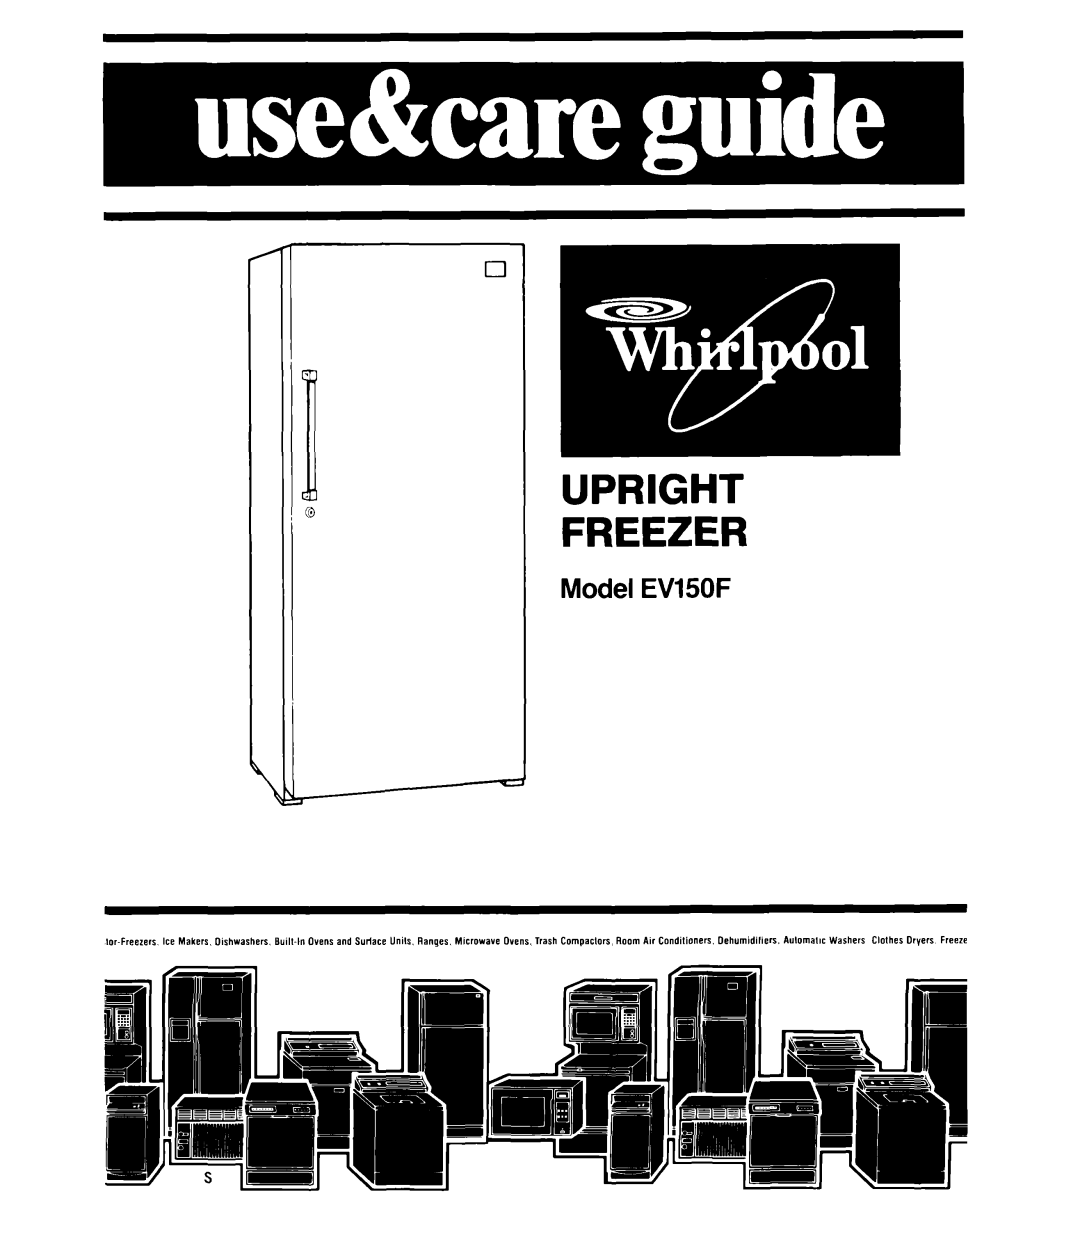 Whirlpool manual Upright Freezer, Model EVISOF 